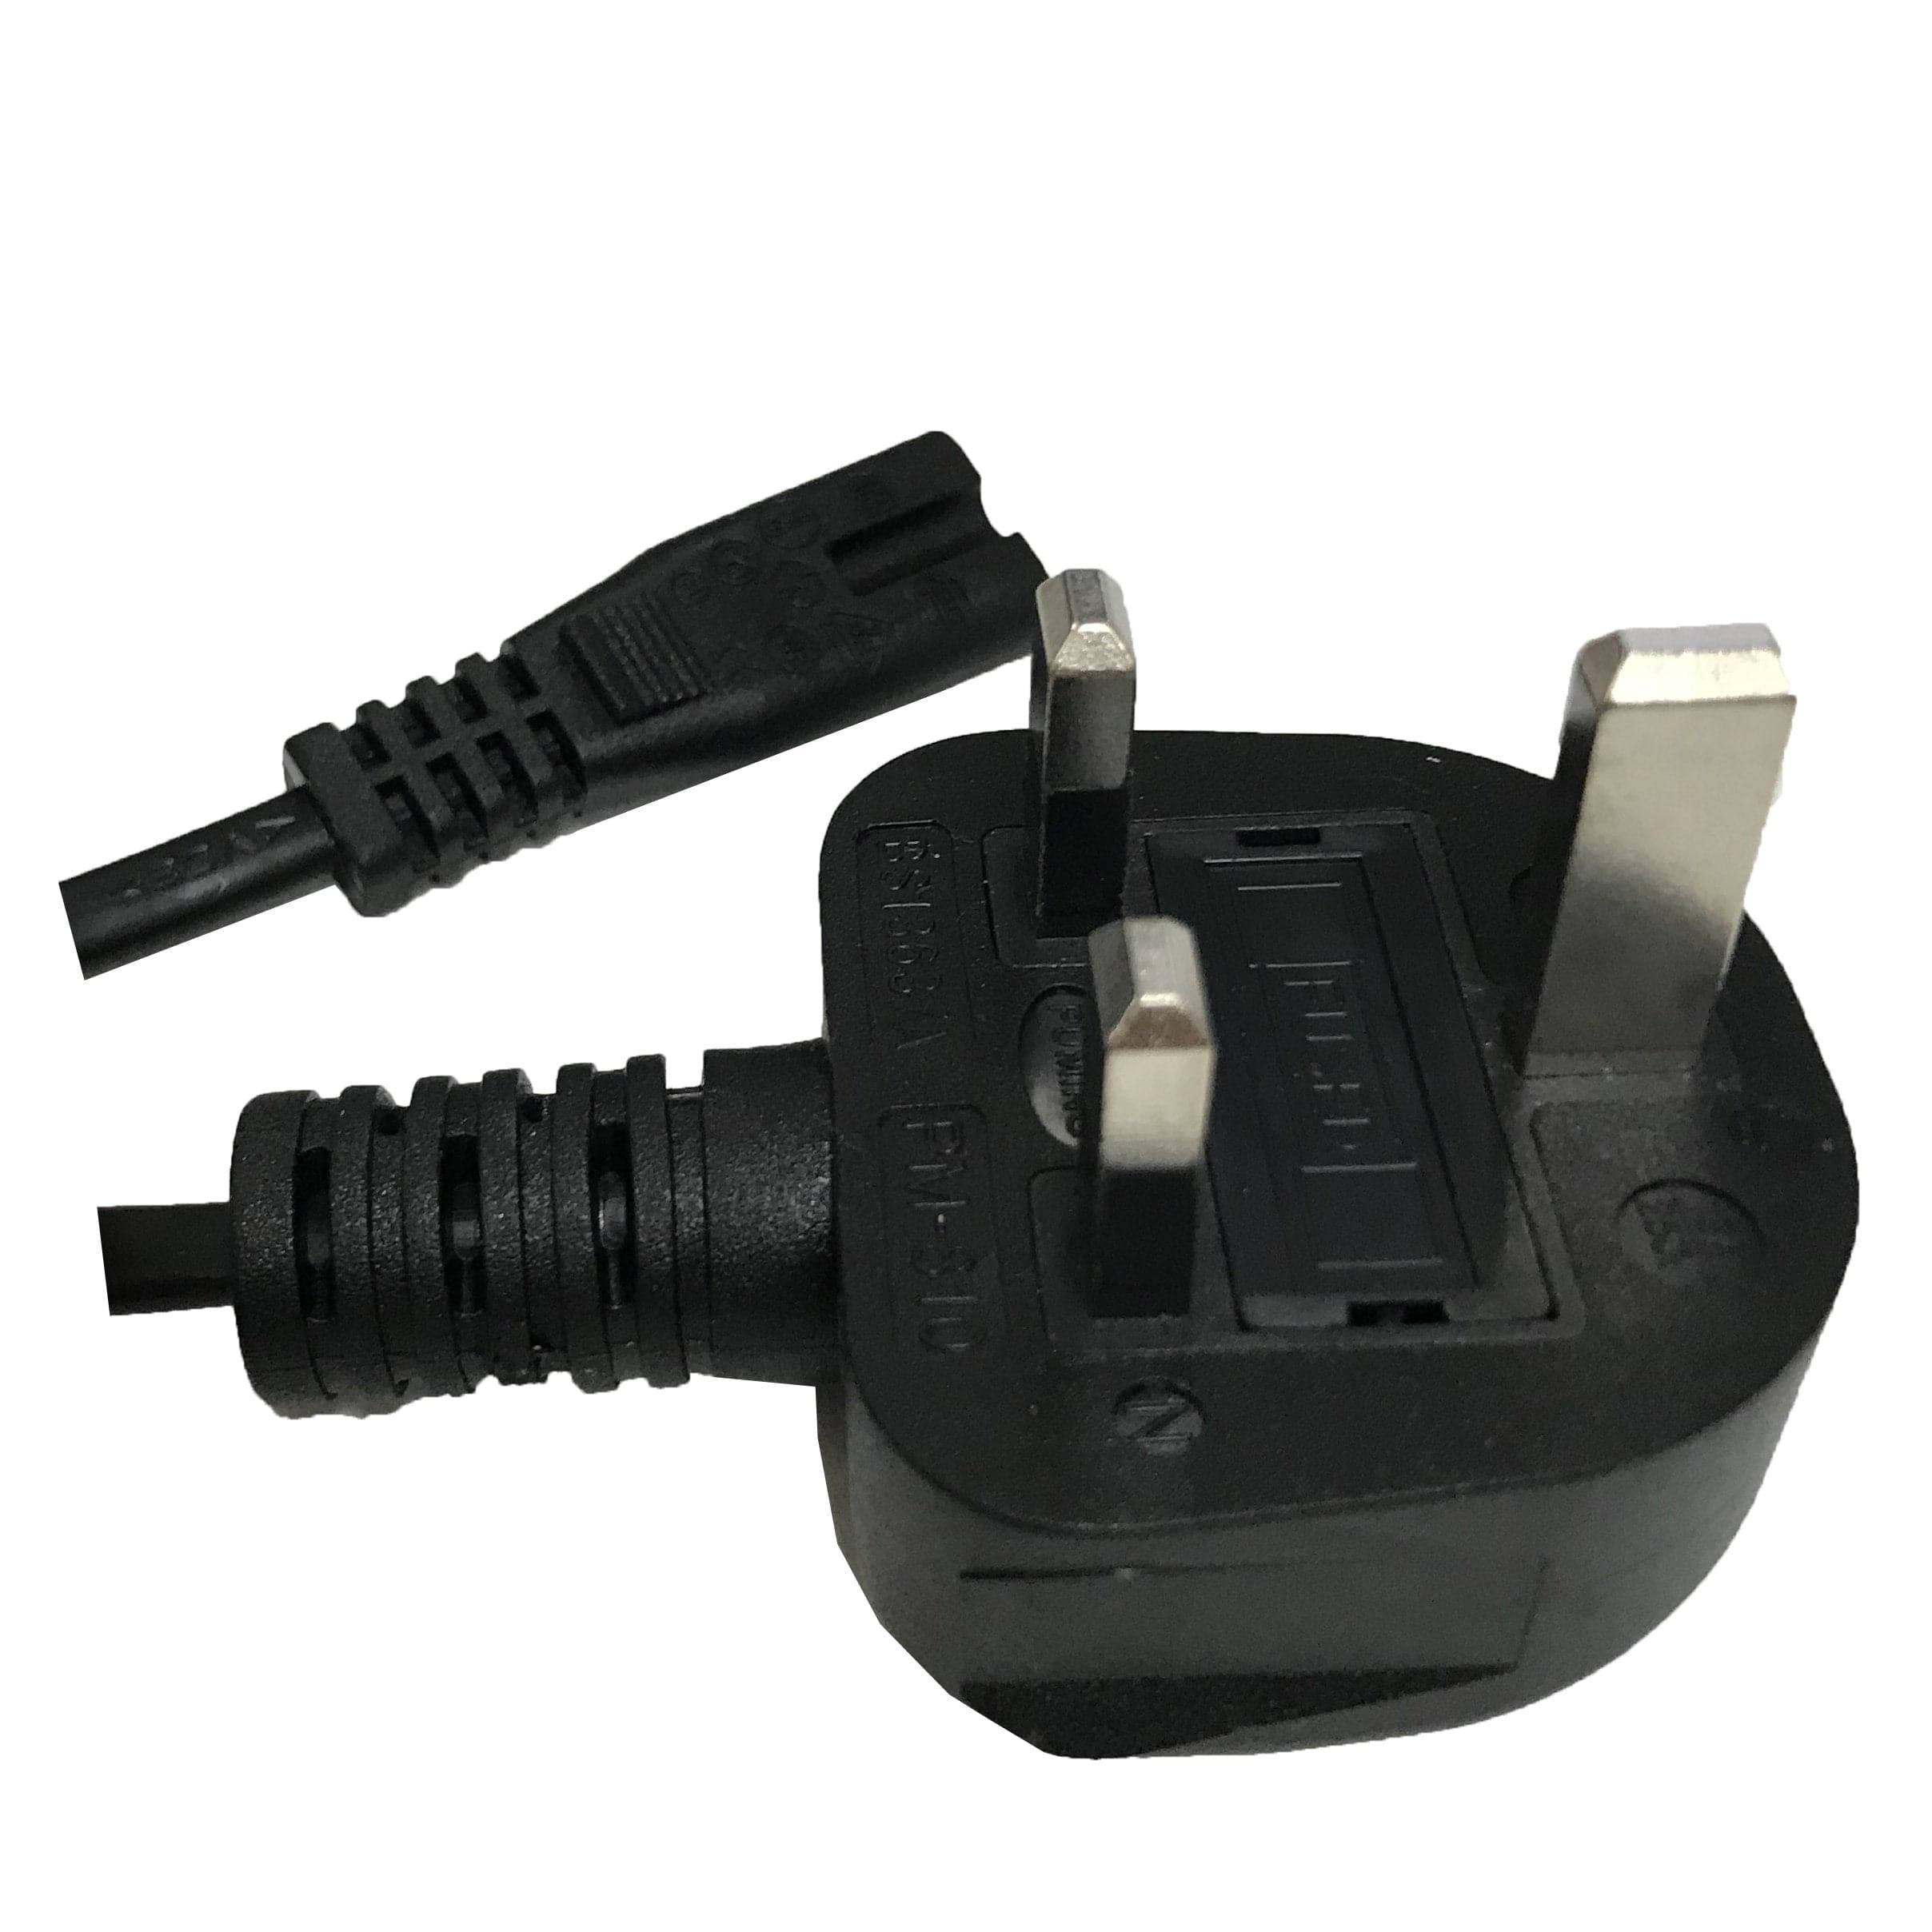 International Spectrum Power Figure 8 Plug Lead Cable Cord Male AC to Female (2m) - AU/EU/UK/US